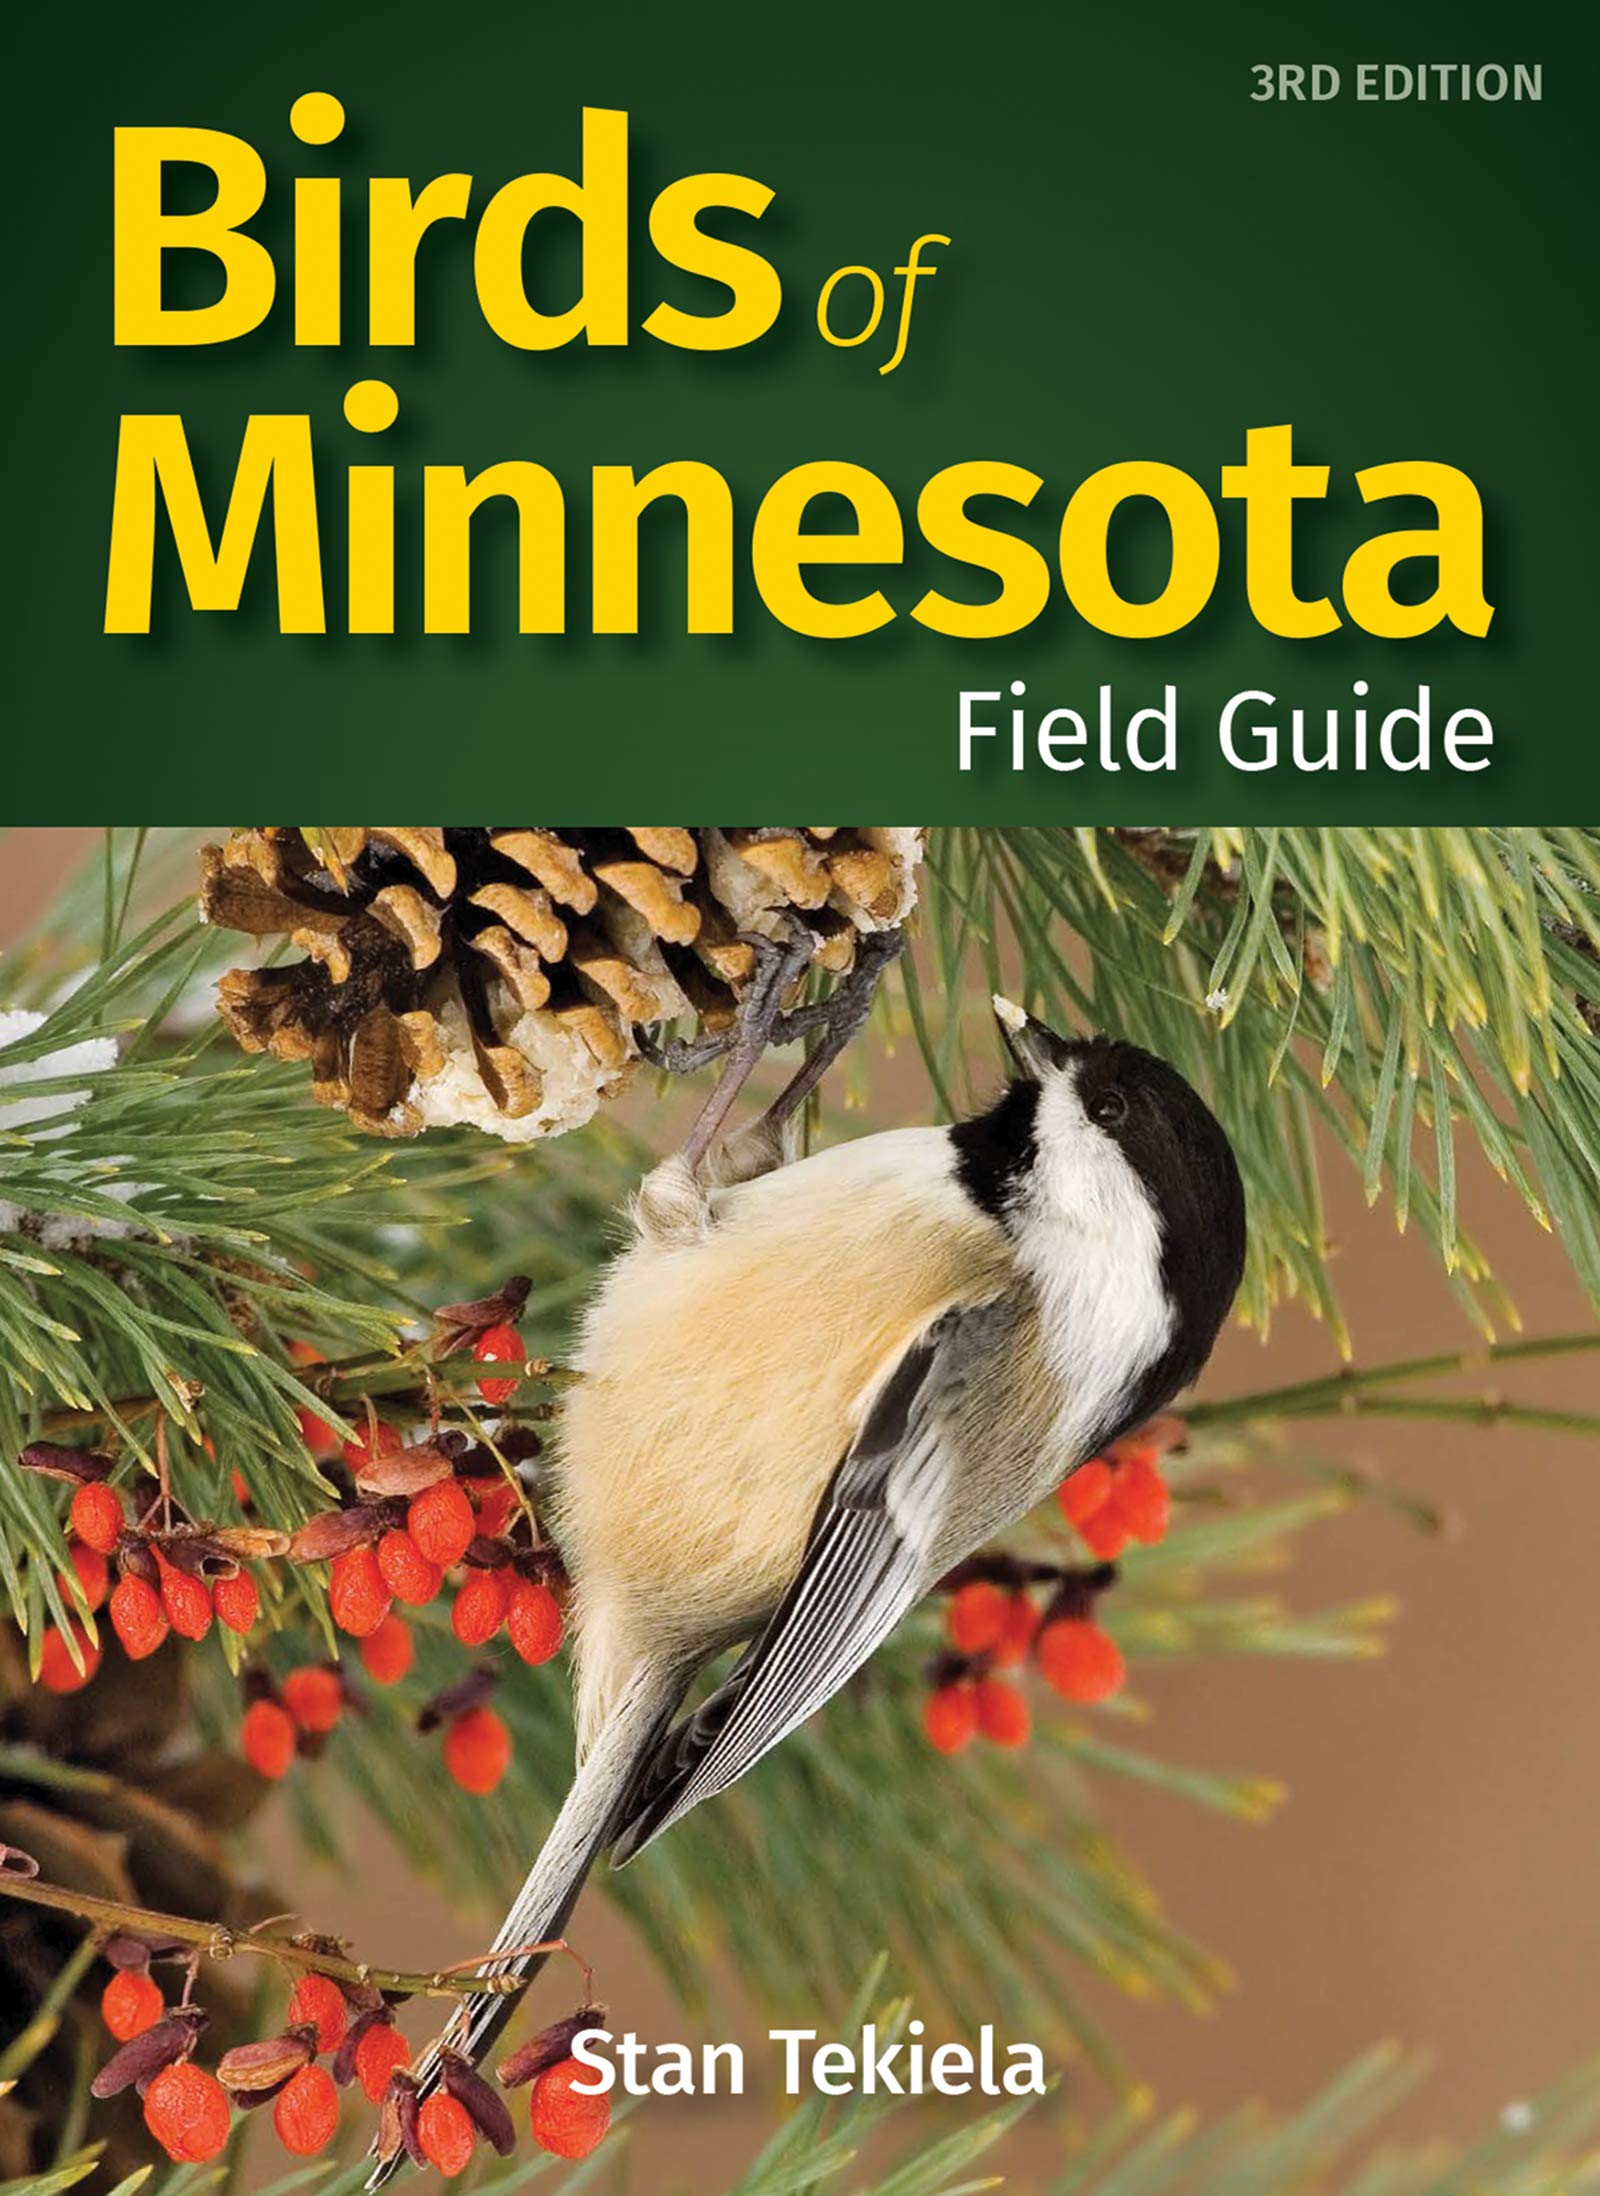 Birds of Minnesota Field Guide - 3rd Edition